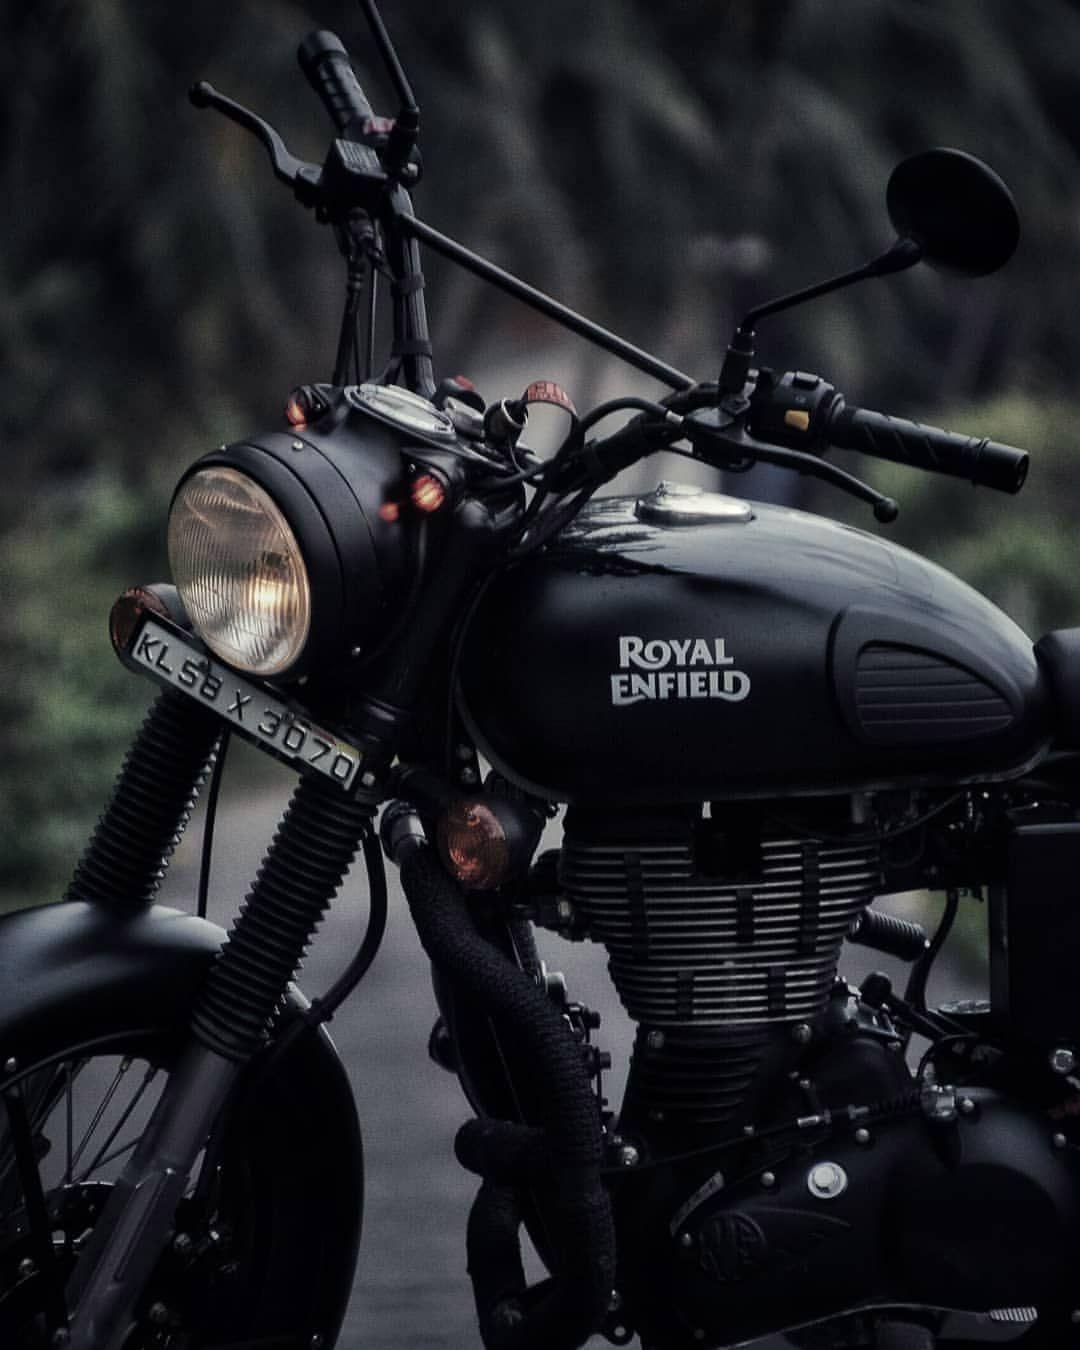 royal #royalenfield #royalenfieldbeasts #enfield #bike #motocross